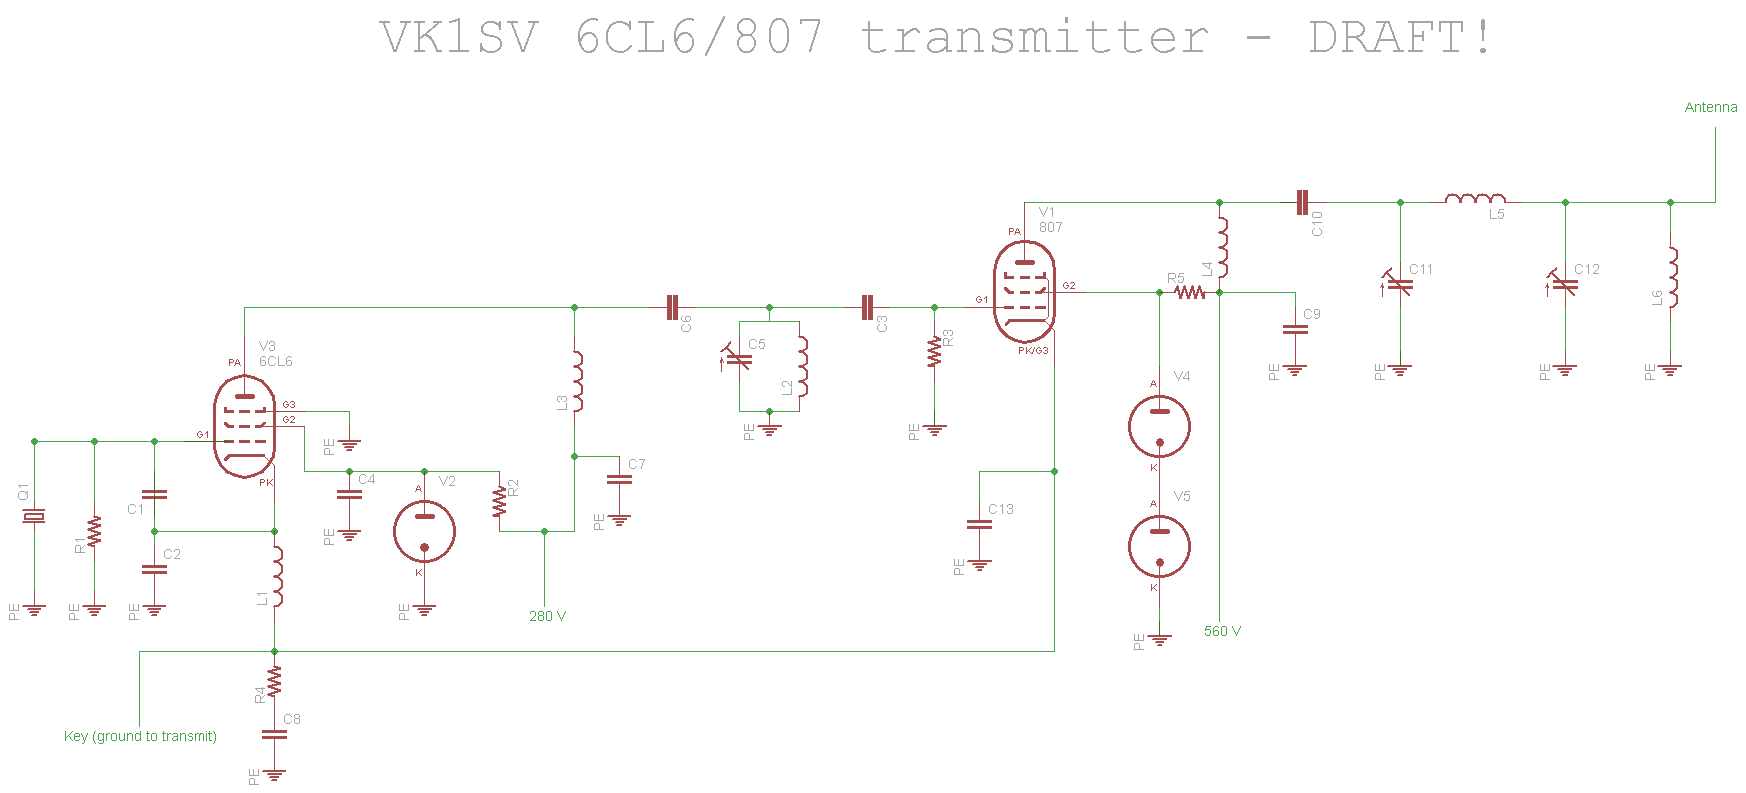 VK1SV 6CL6-807 transmitter schematic